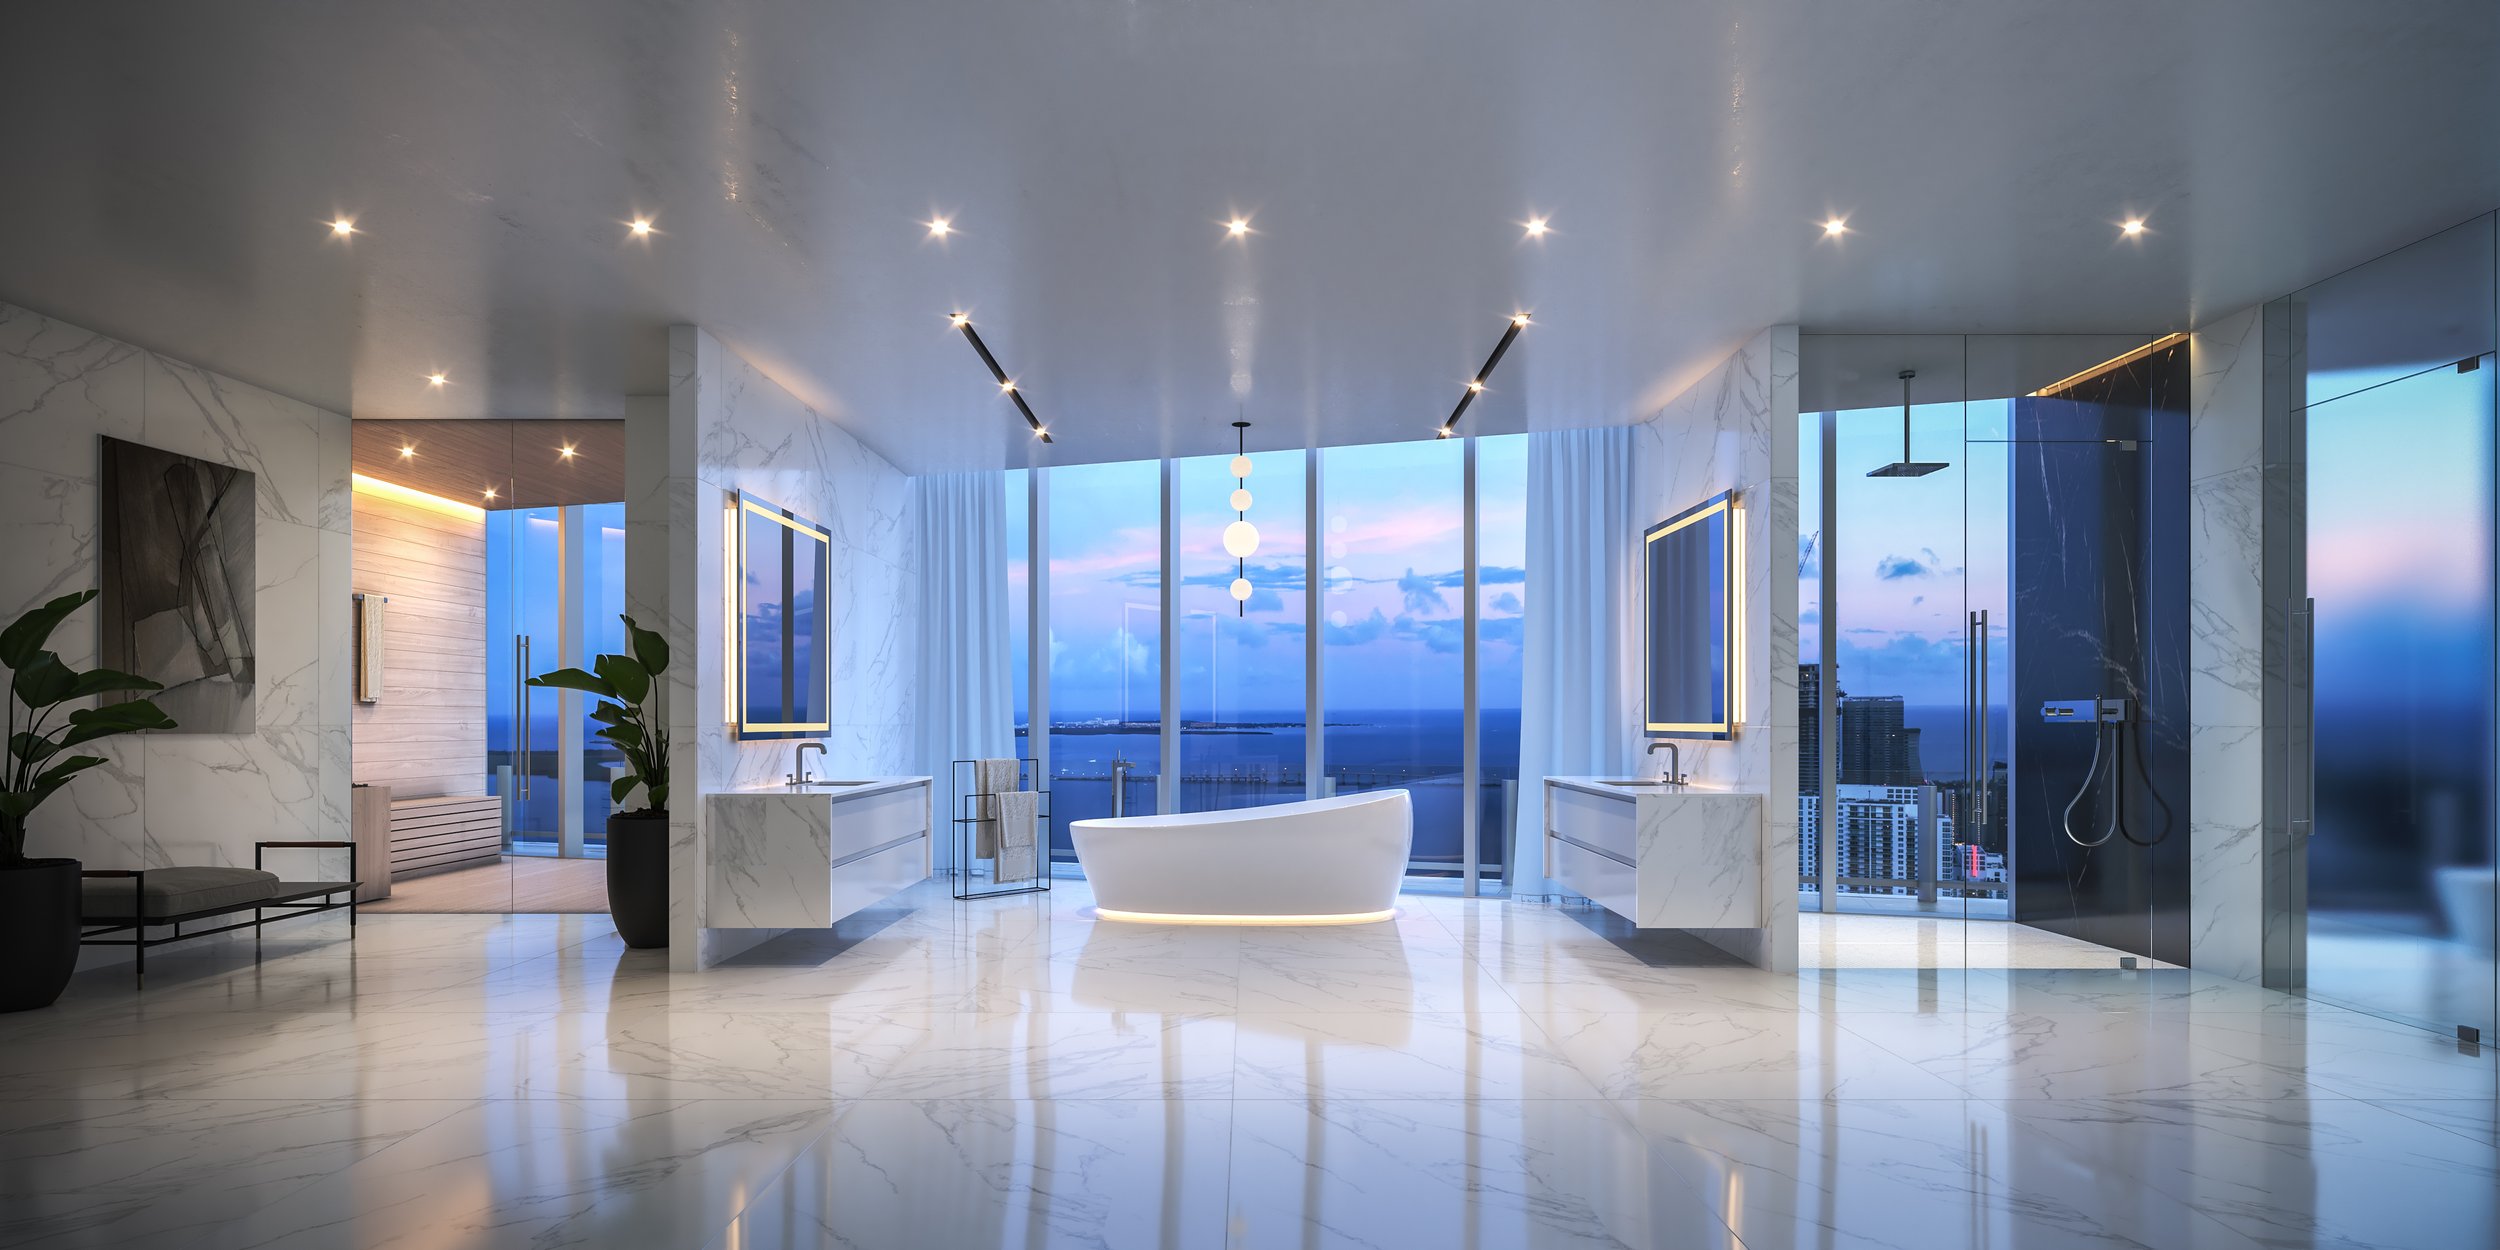 etx_AMT_View15_PH 64th Floor Master Bathroom_a02.jpg